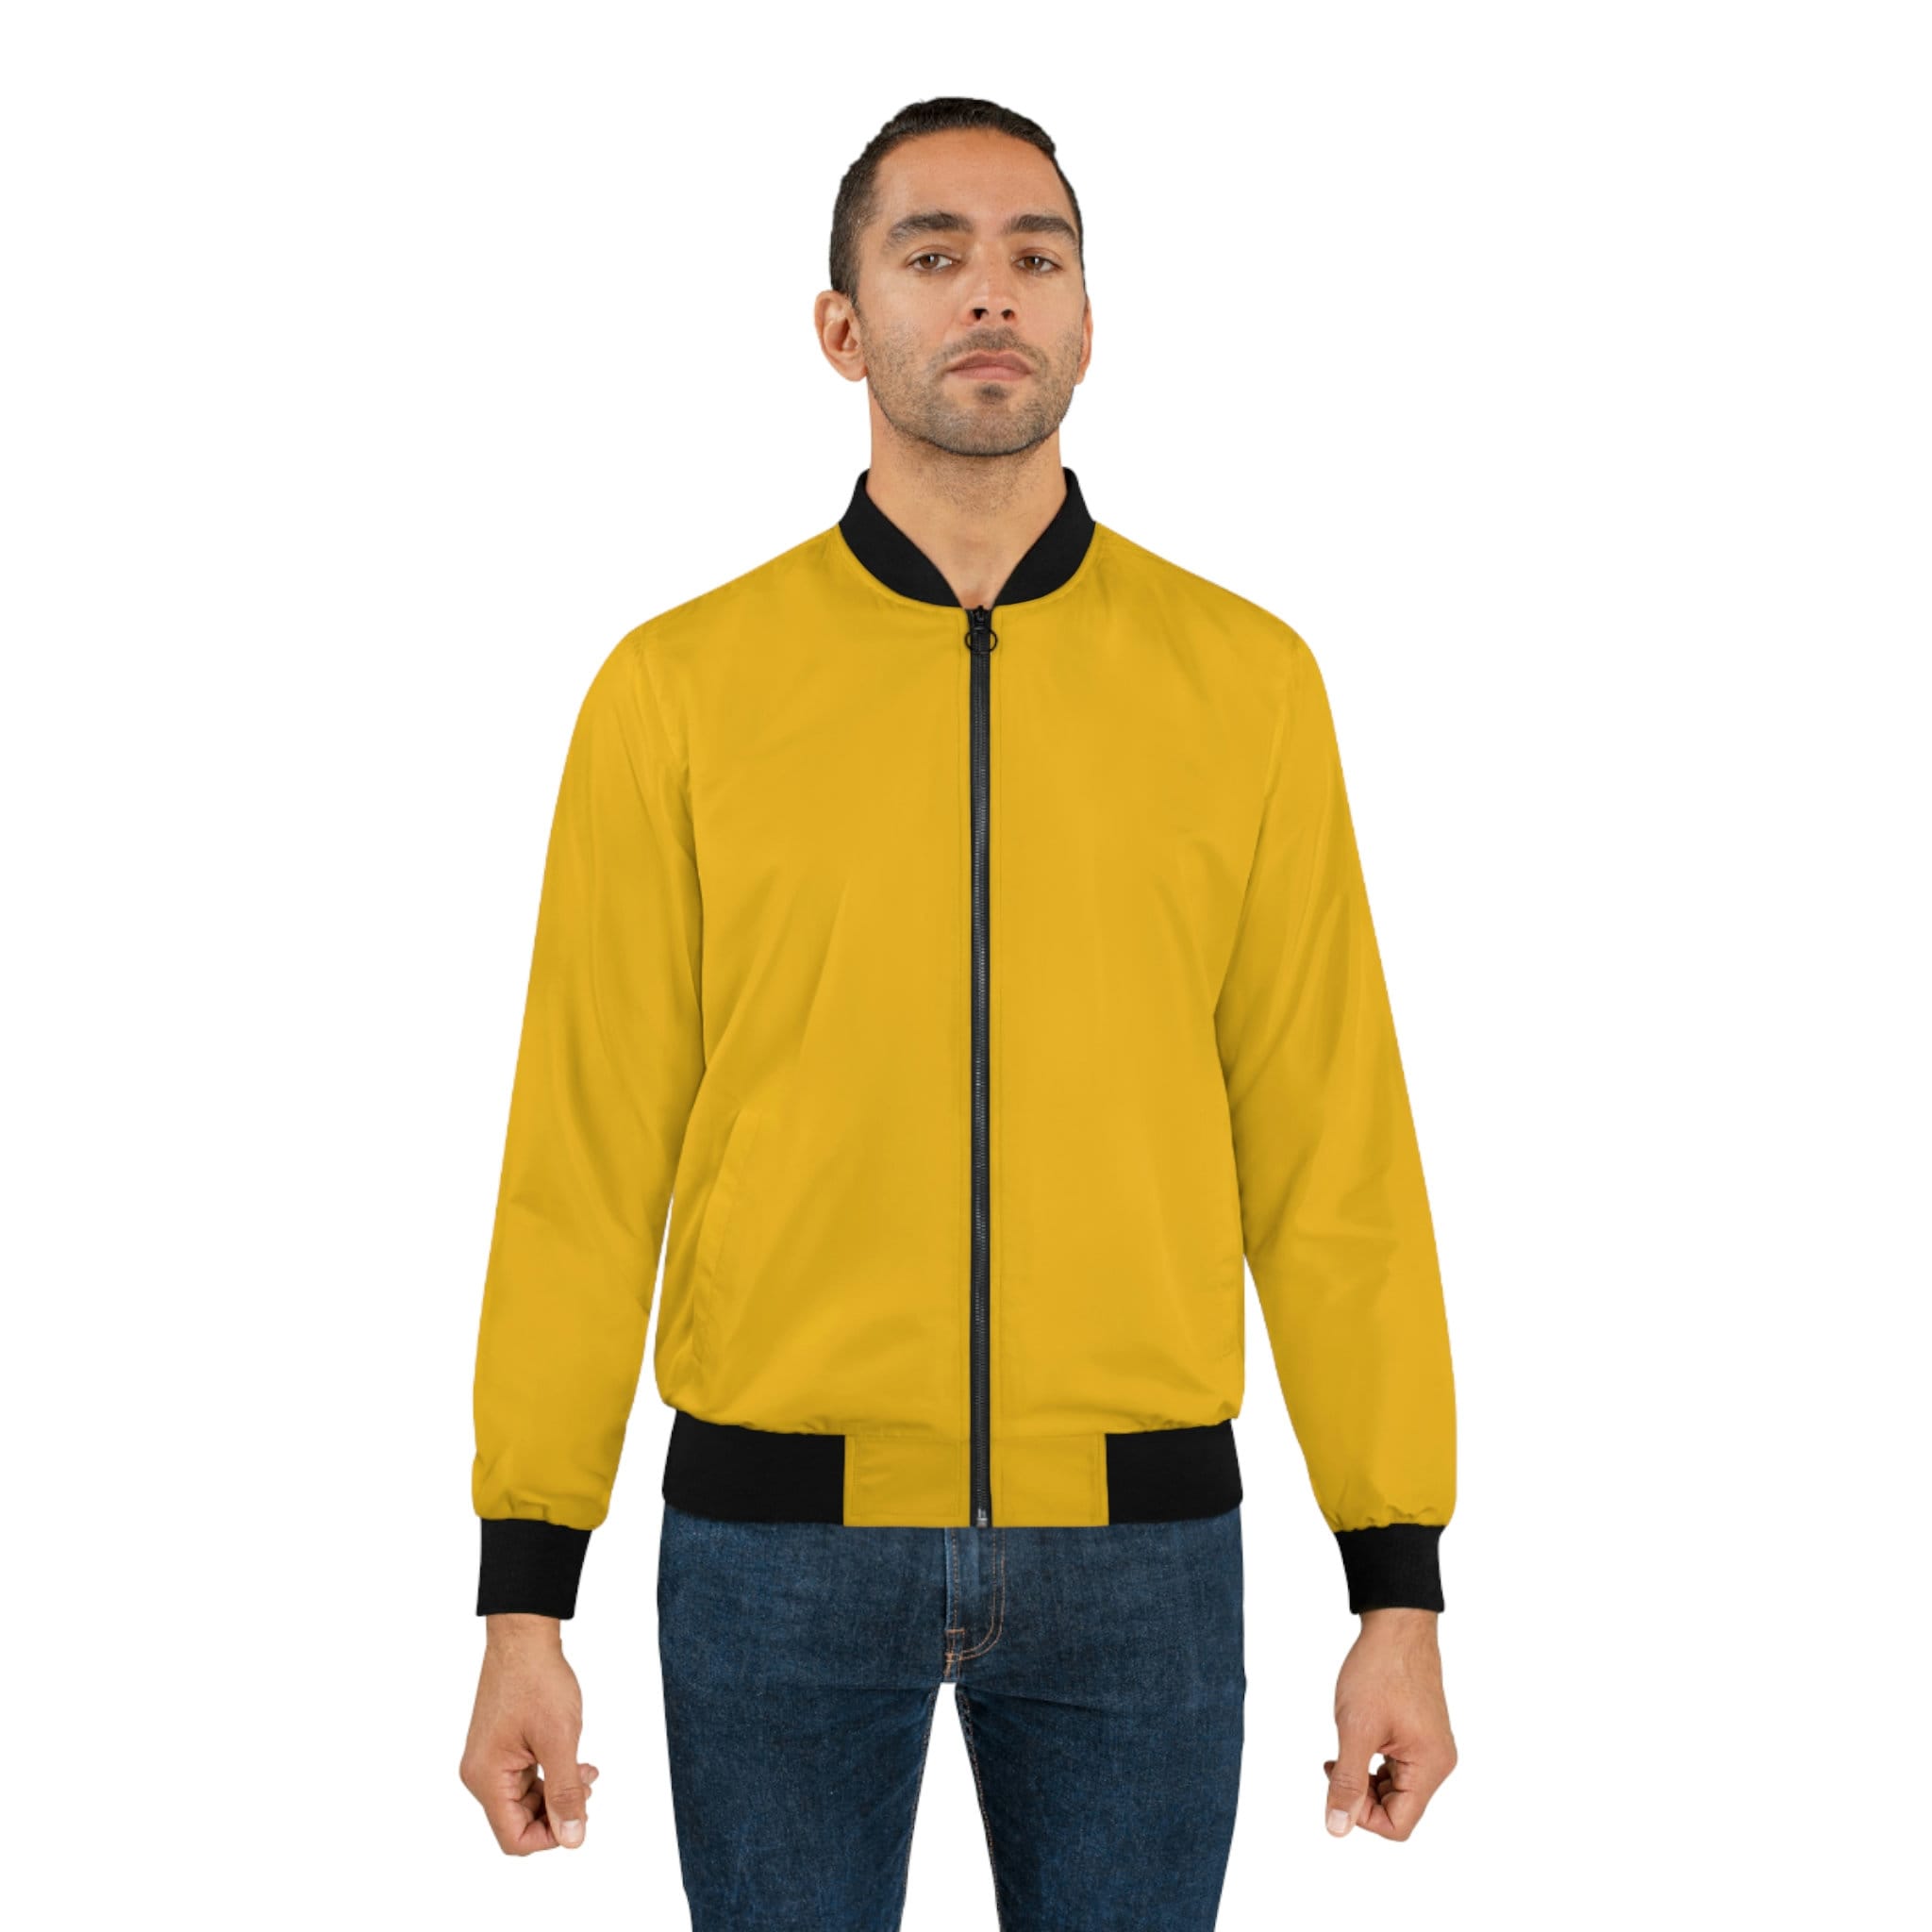 The Vibrant Yellow Jacket and Fox Fusion Men's Bomber Jacket